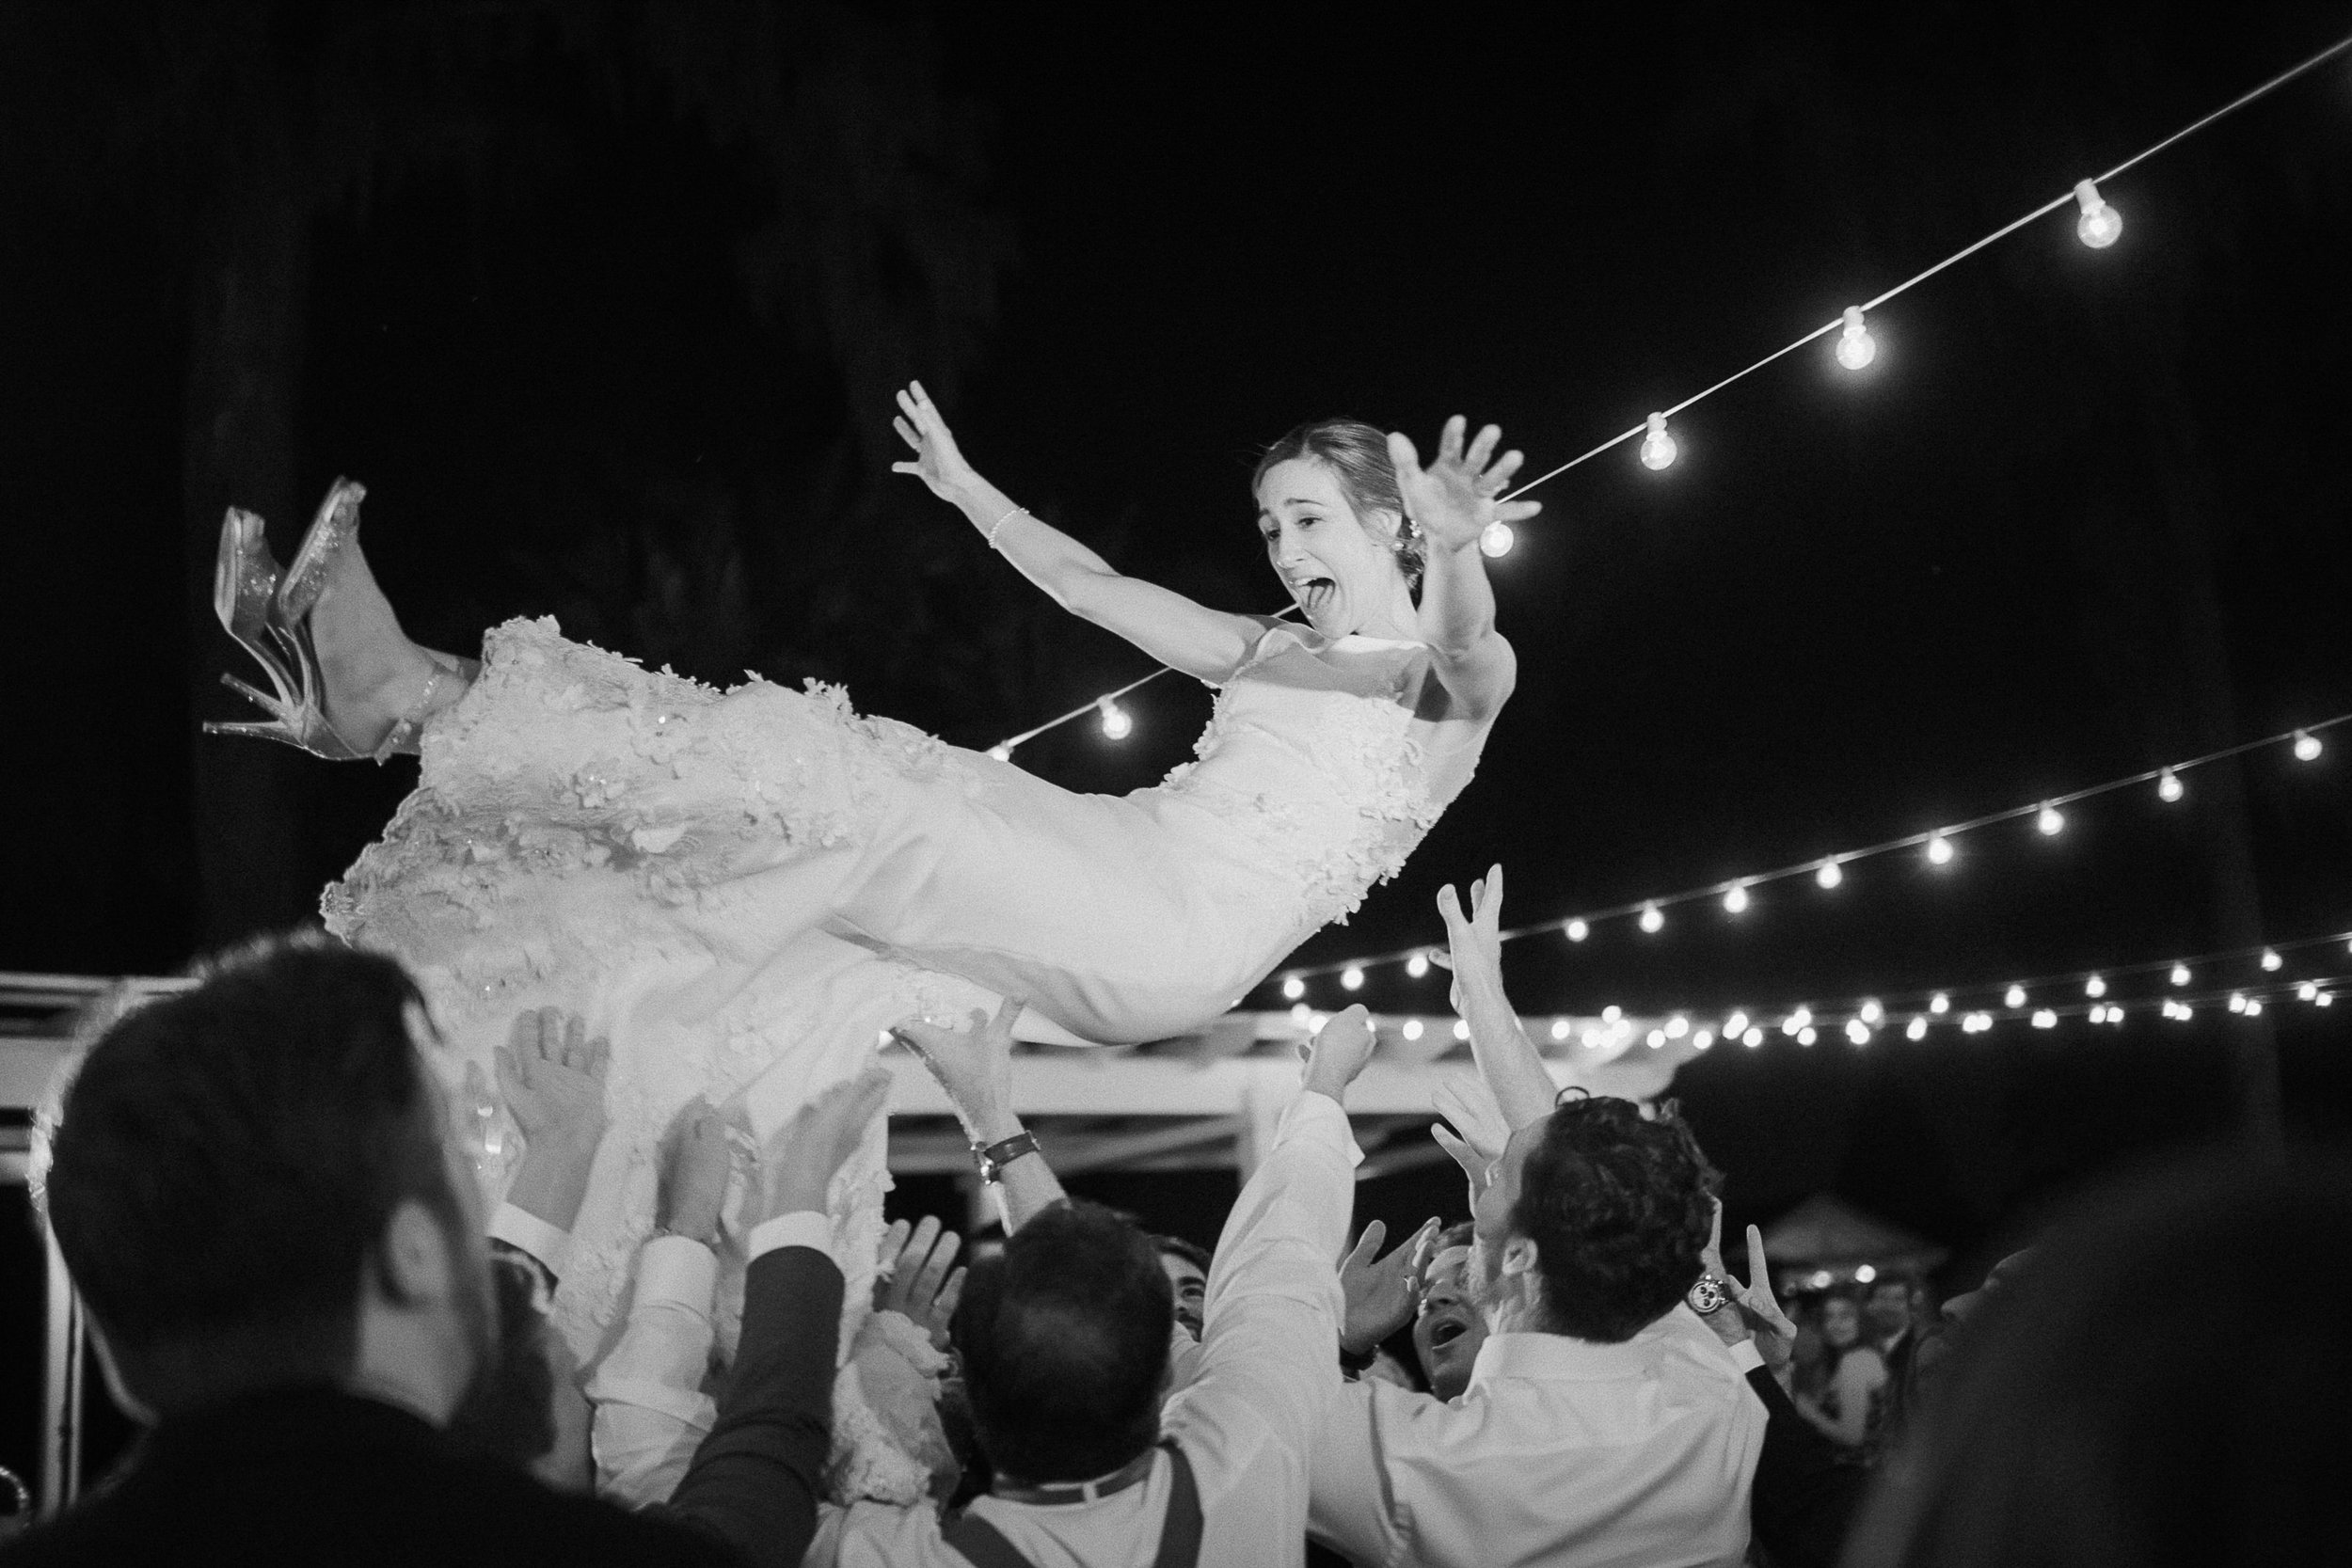 Elegant Florida Wedding at Cypress Grove Estate House in Orlando